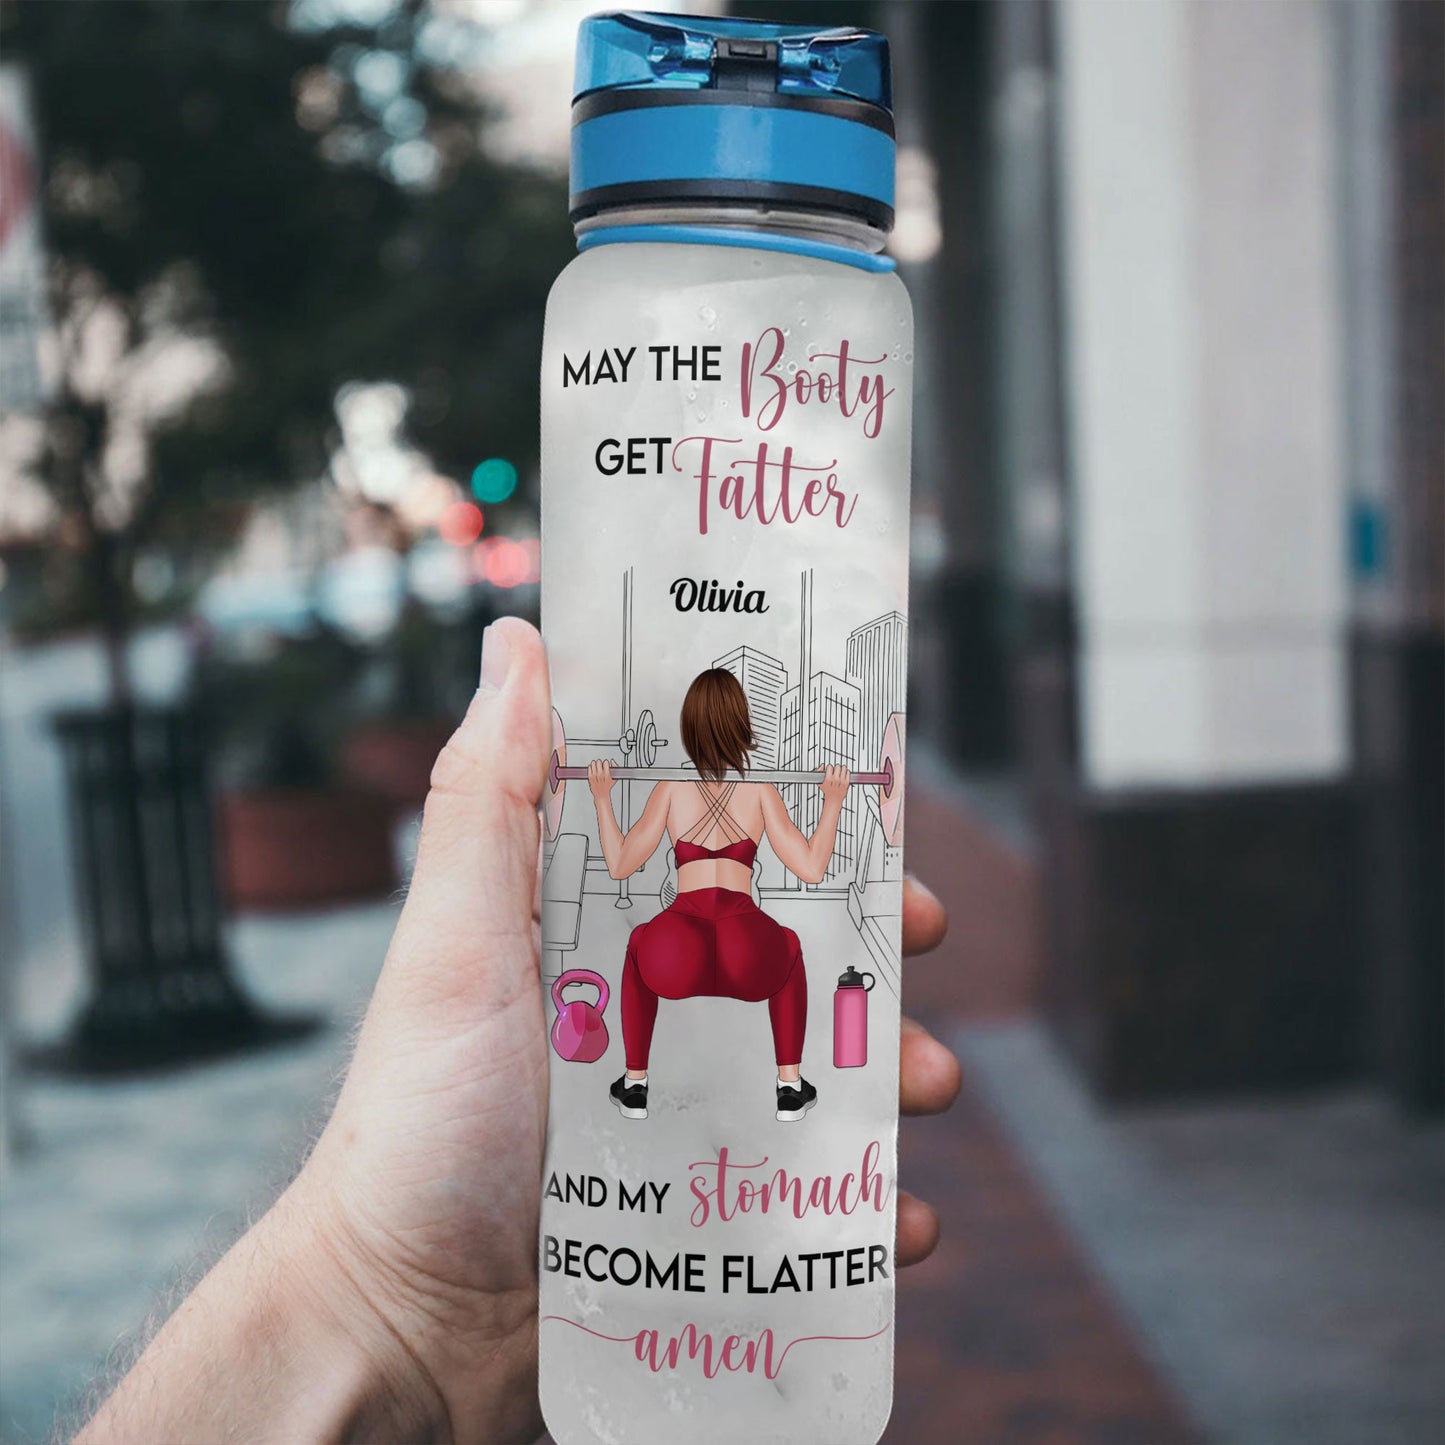 Aesthetic water bottle fitness that girl @itsbeckaaa on Instagram